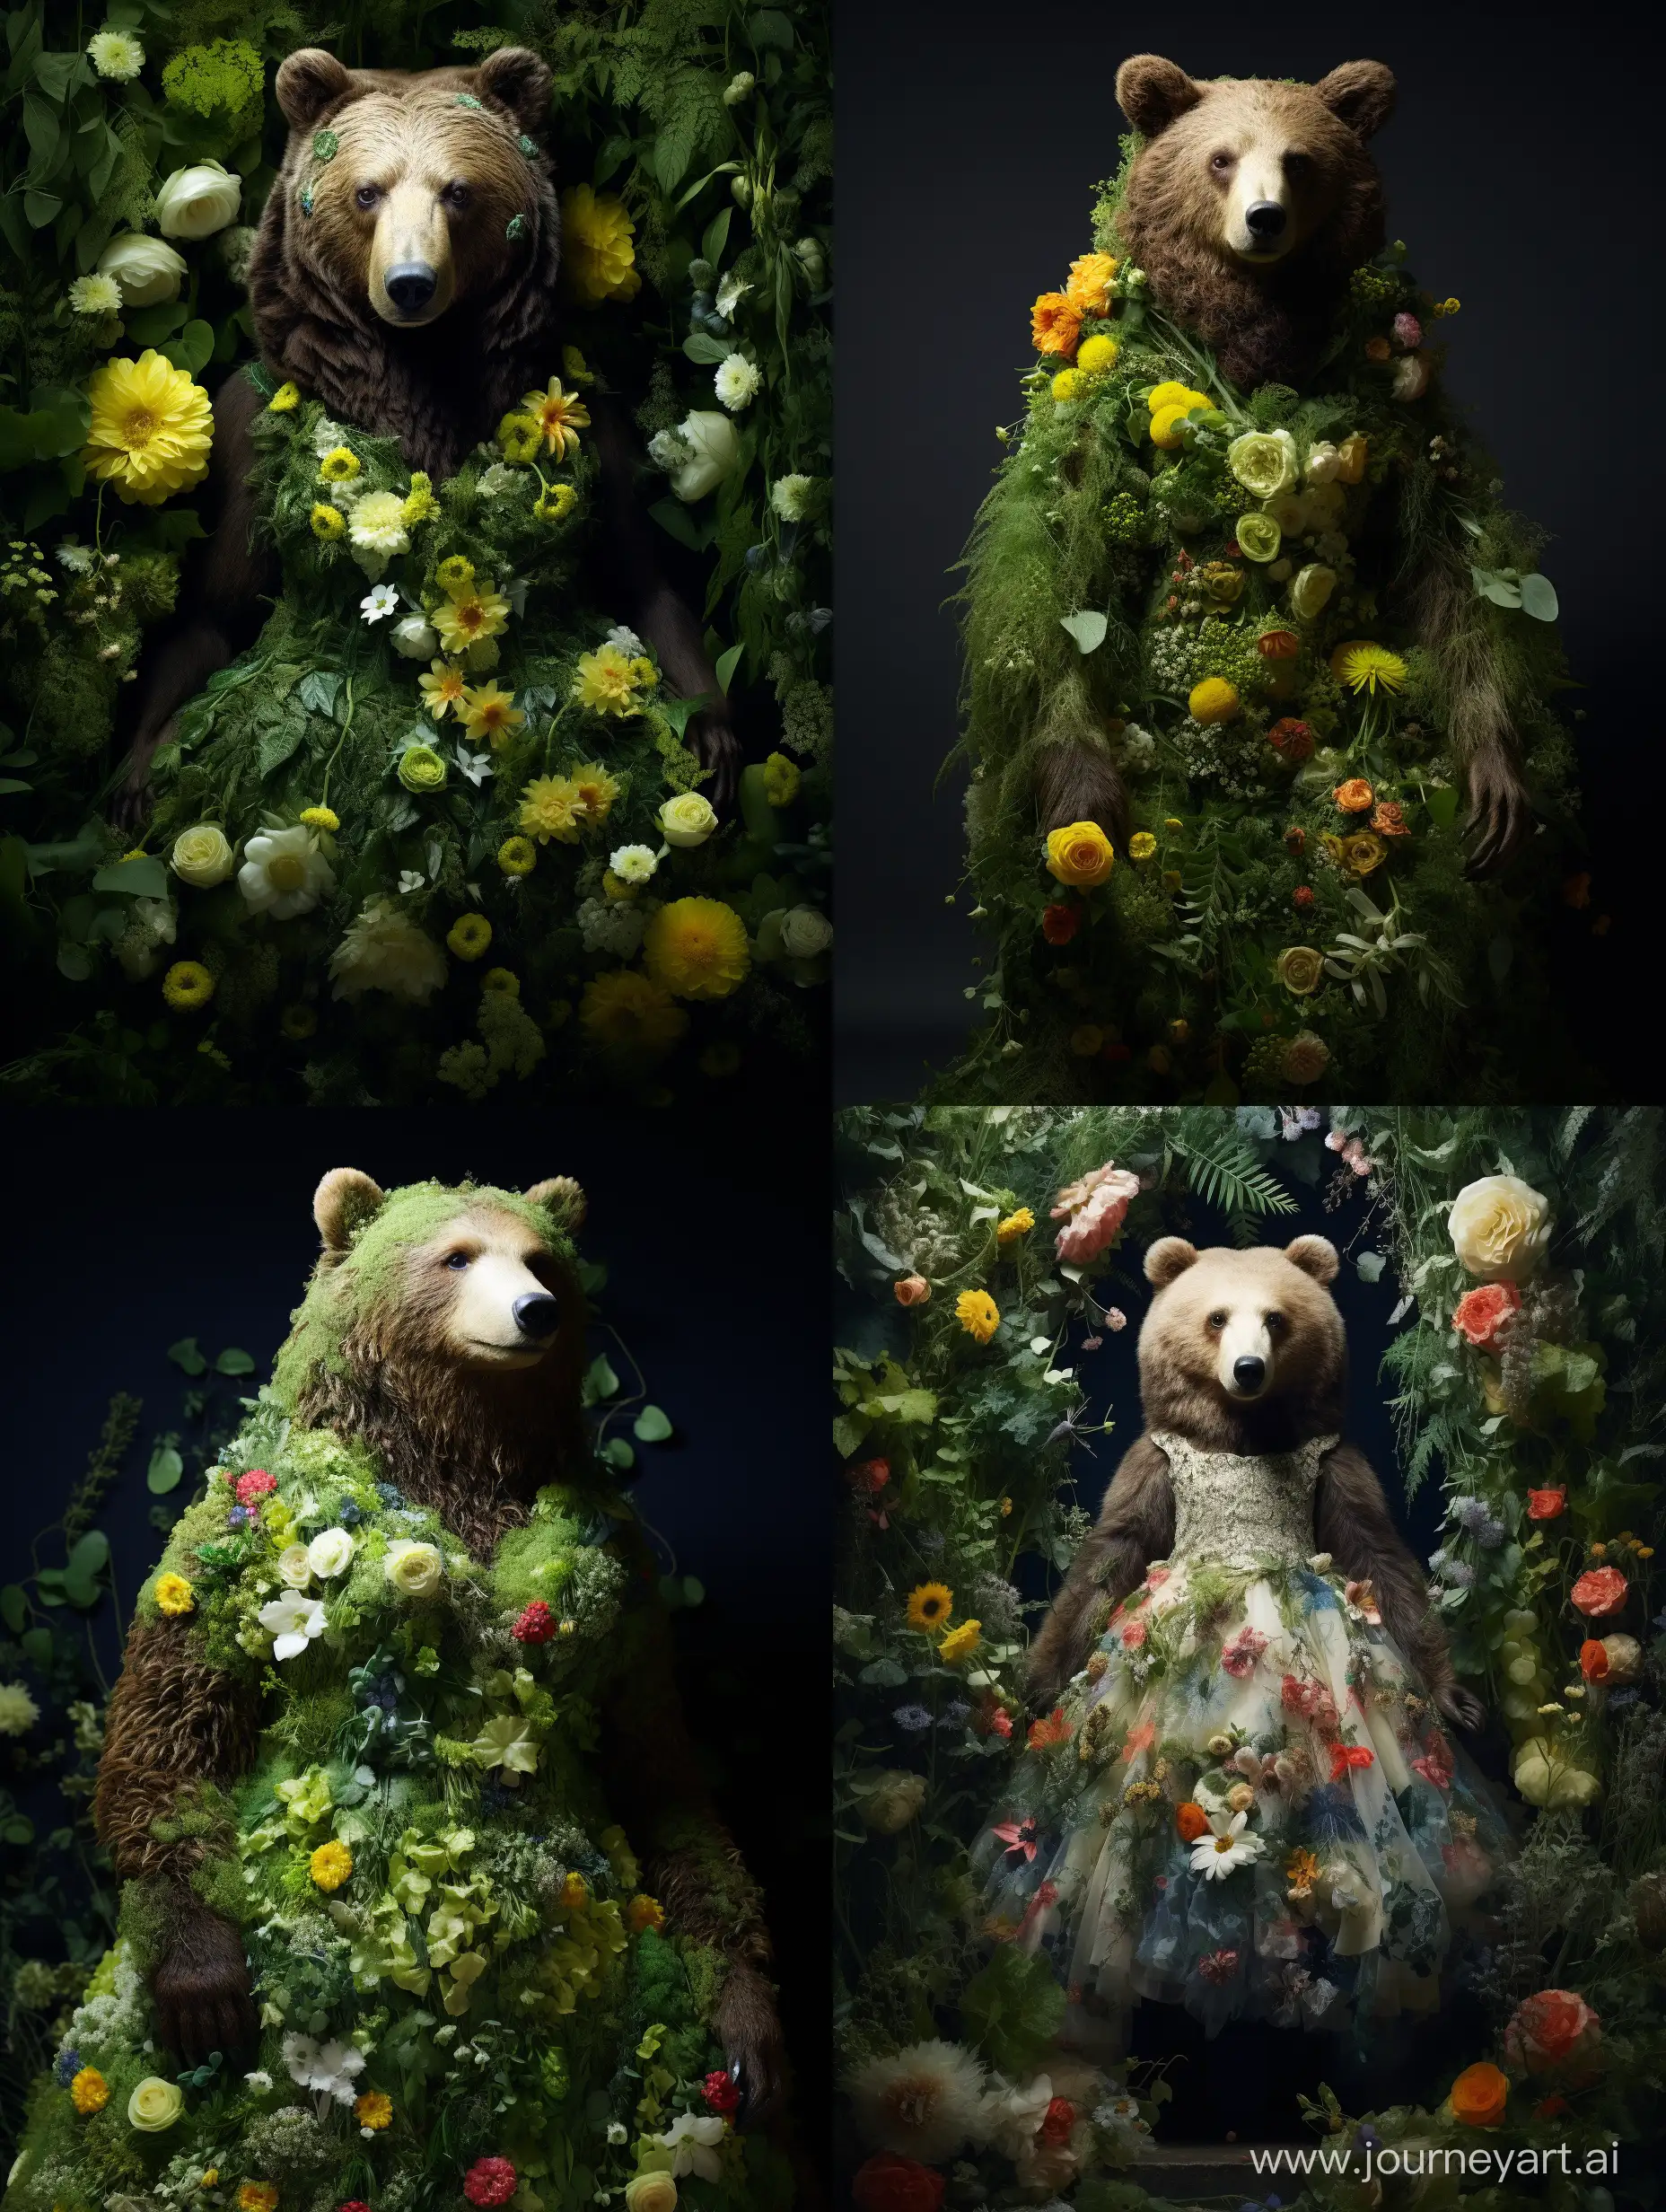 Enchanting-SheBear-in-HyperDetailed-Flora-Dress-Under-Bright-Light